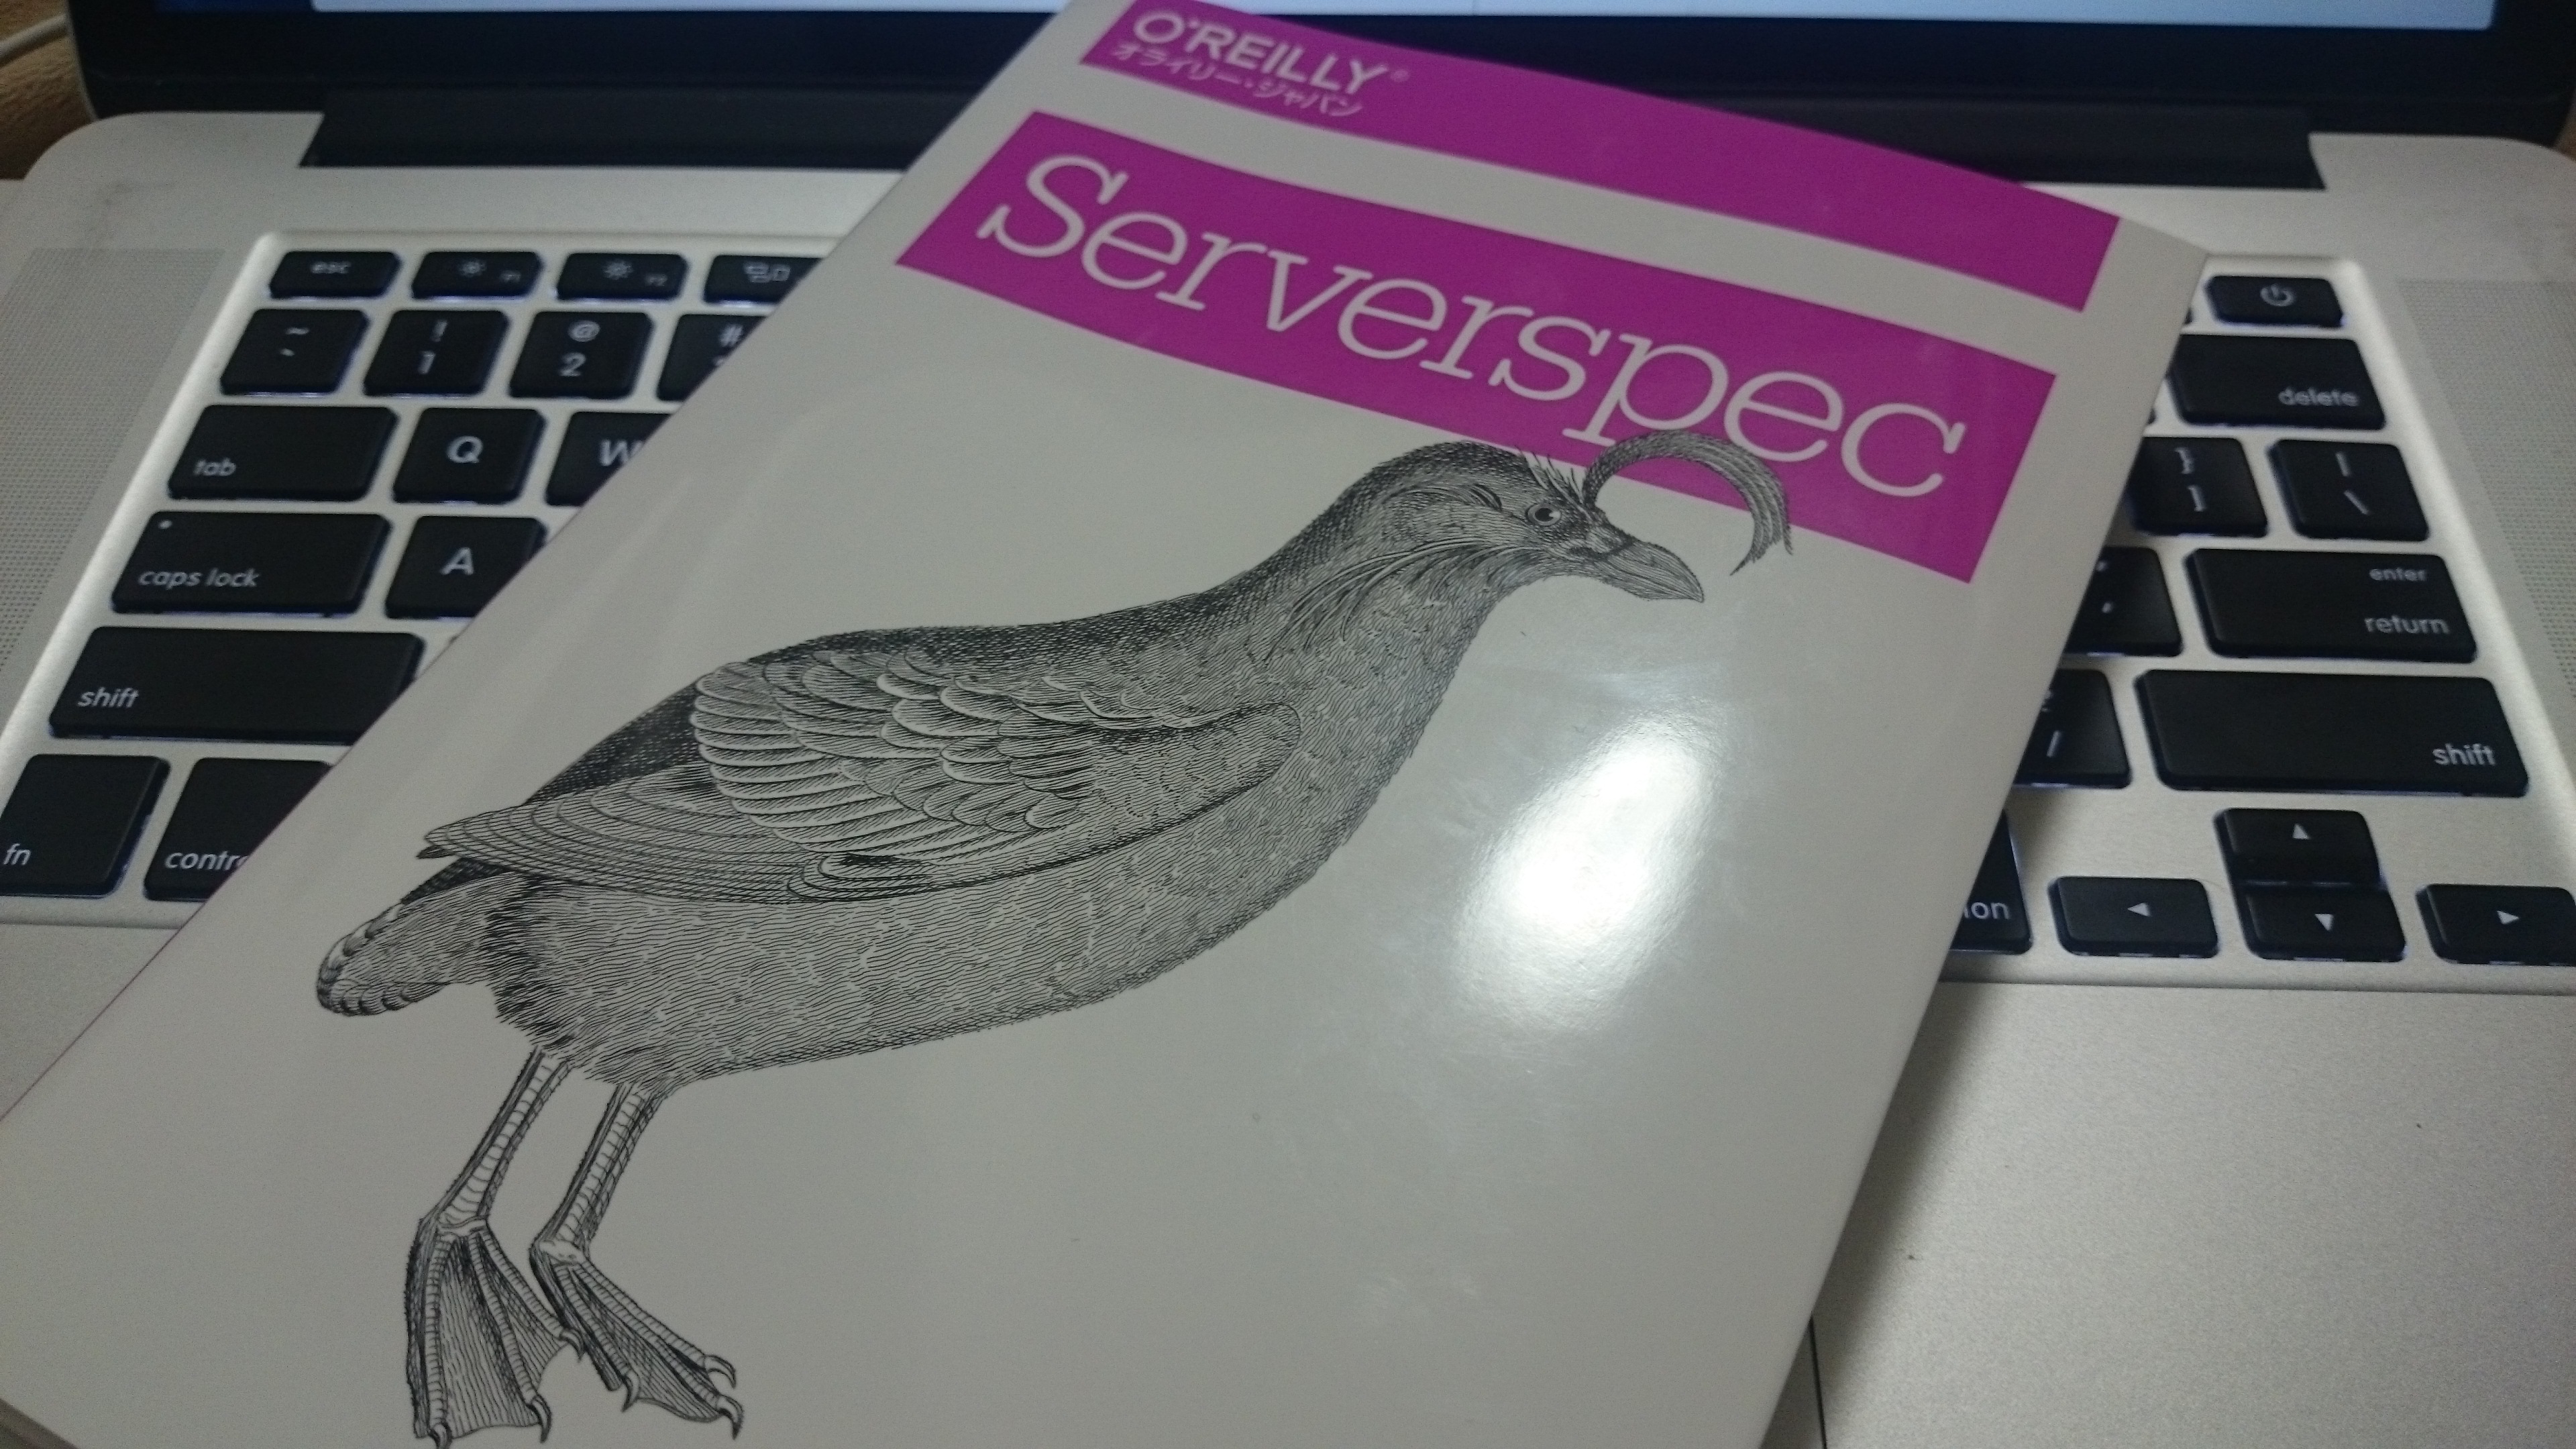 "Serverspec book cover"